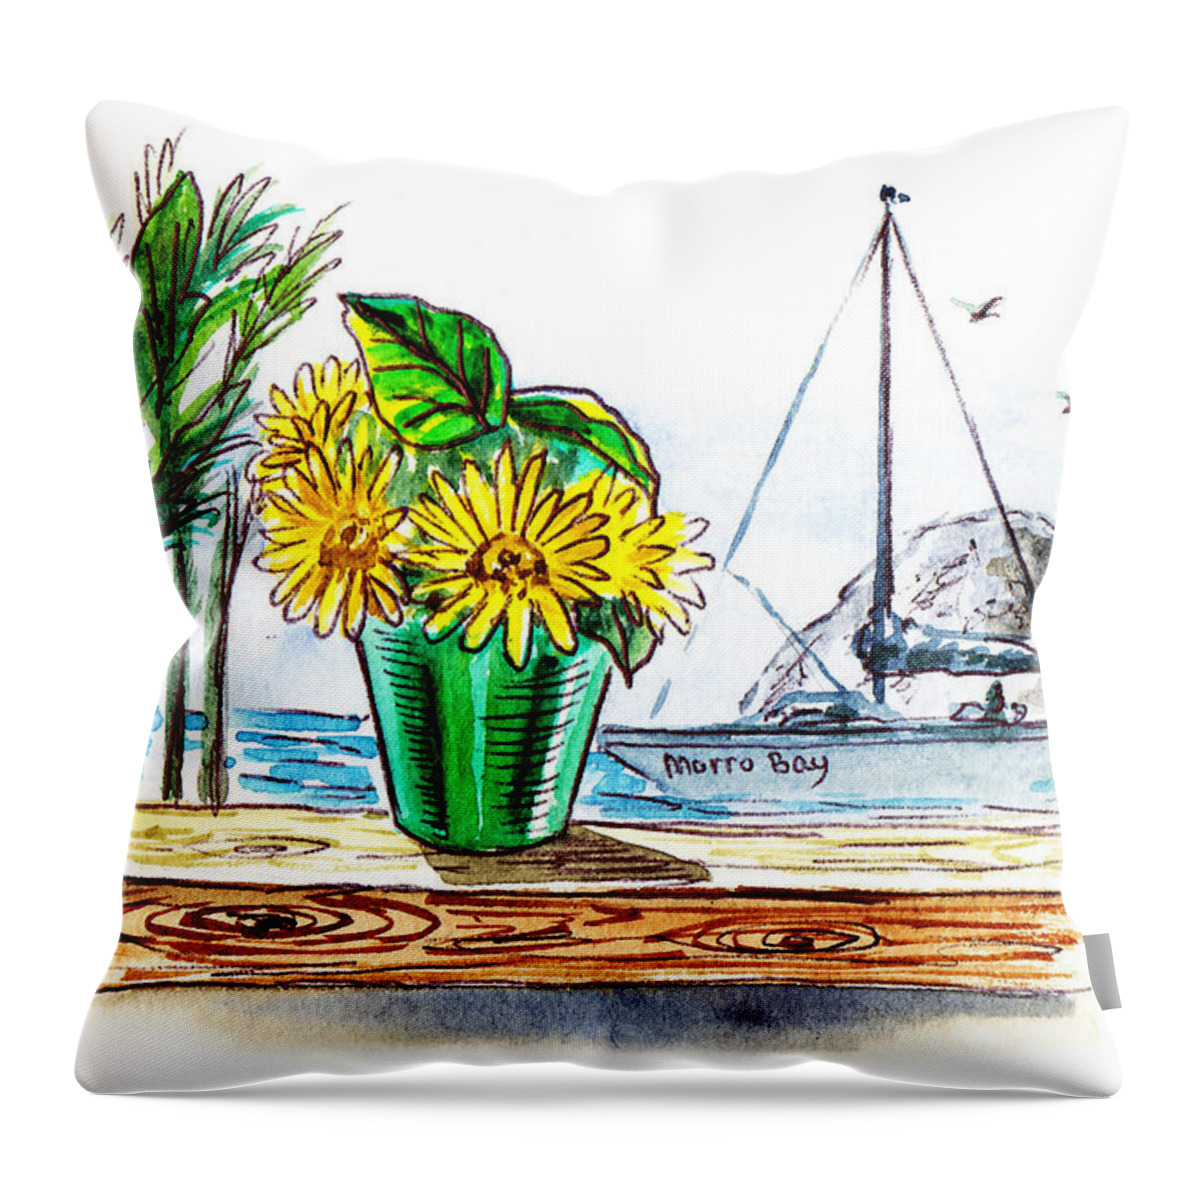 Morro Bay Throw Pillow featuring the painting Morro Bay California by Irina Sztukowski